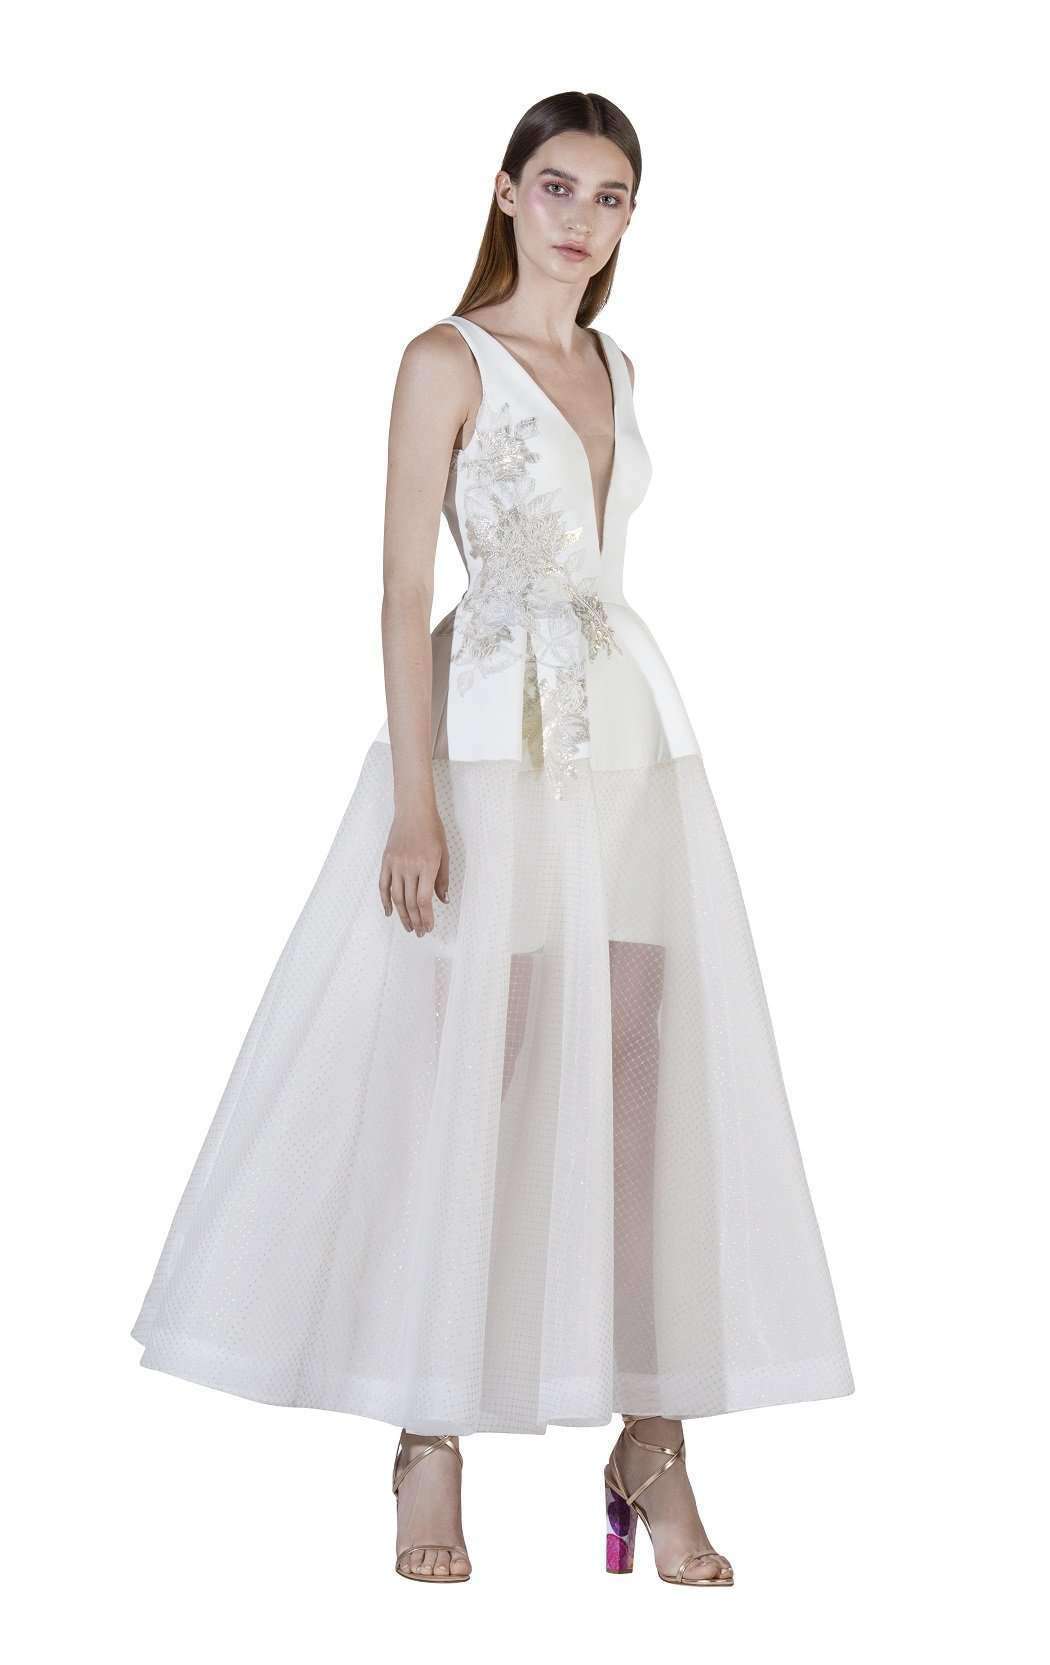 Saiid Kobeisy SK3401 Dress | Buy Designer Gowns & Evening Dresses ...